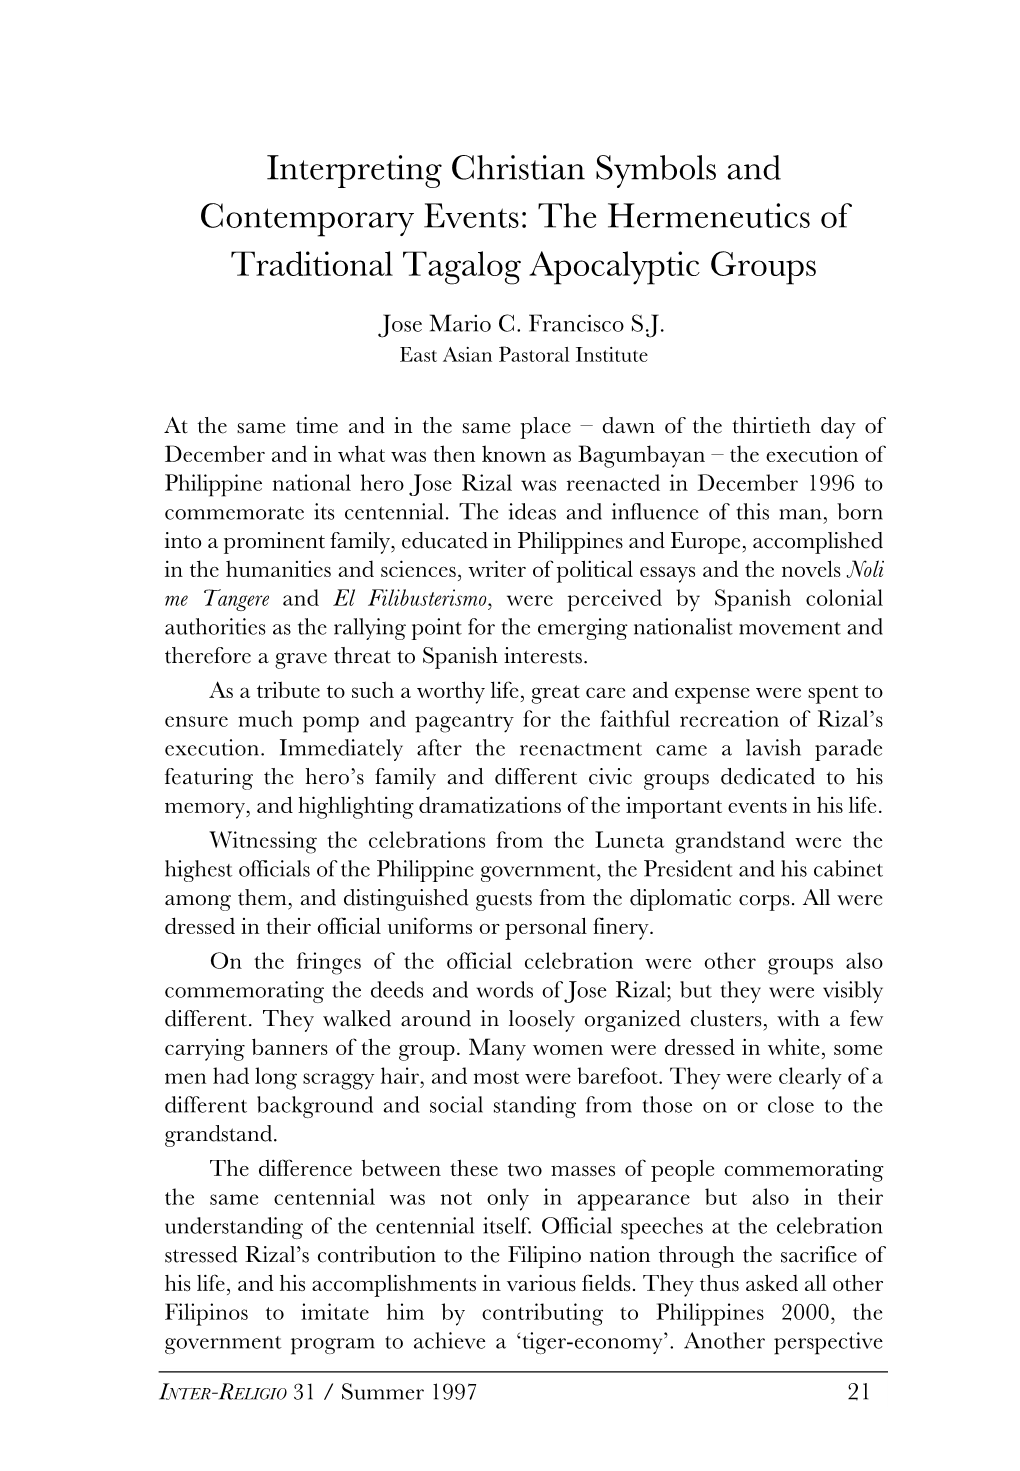 The Hermeneutics of Traditional Tagalog Apocalyptic Groups